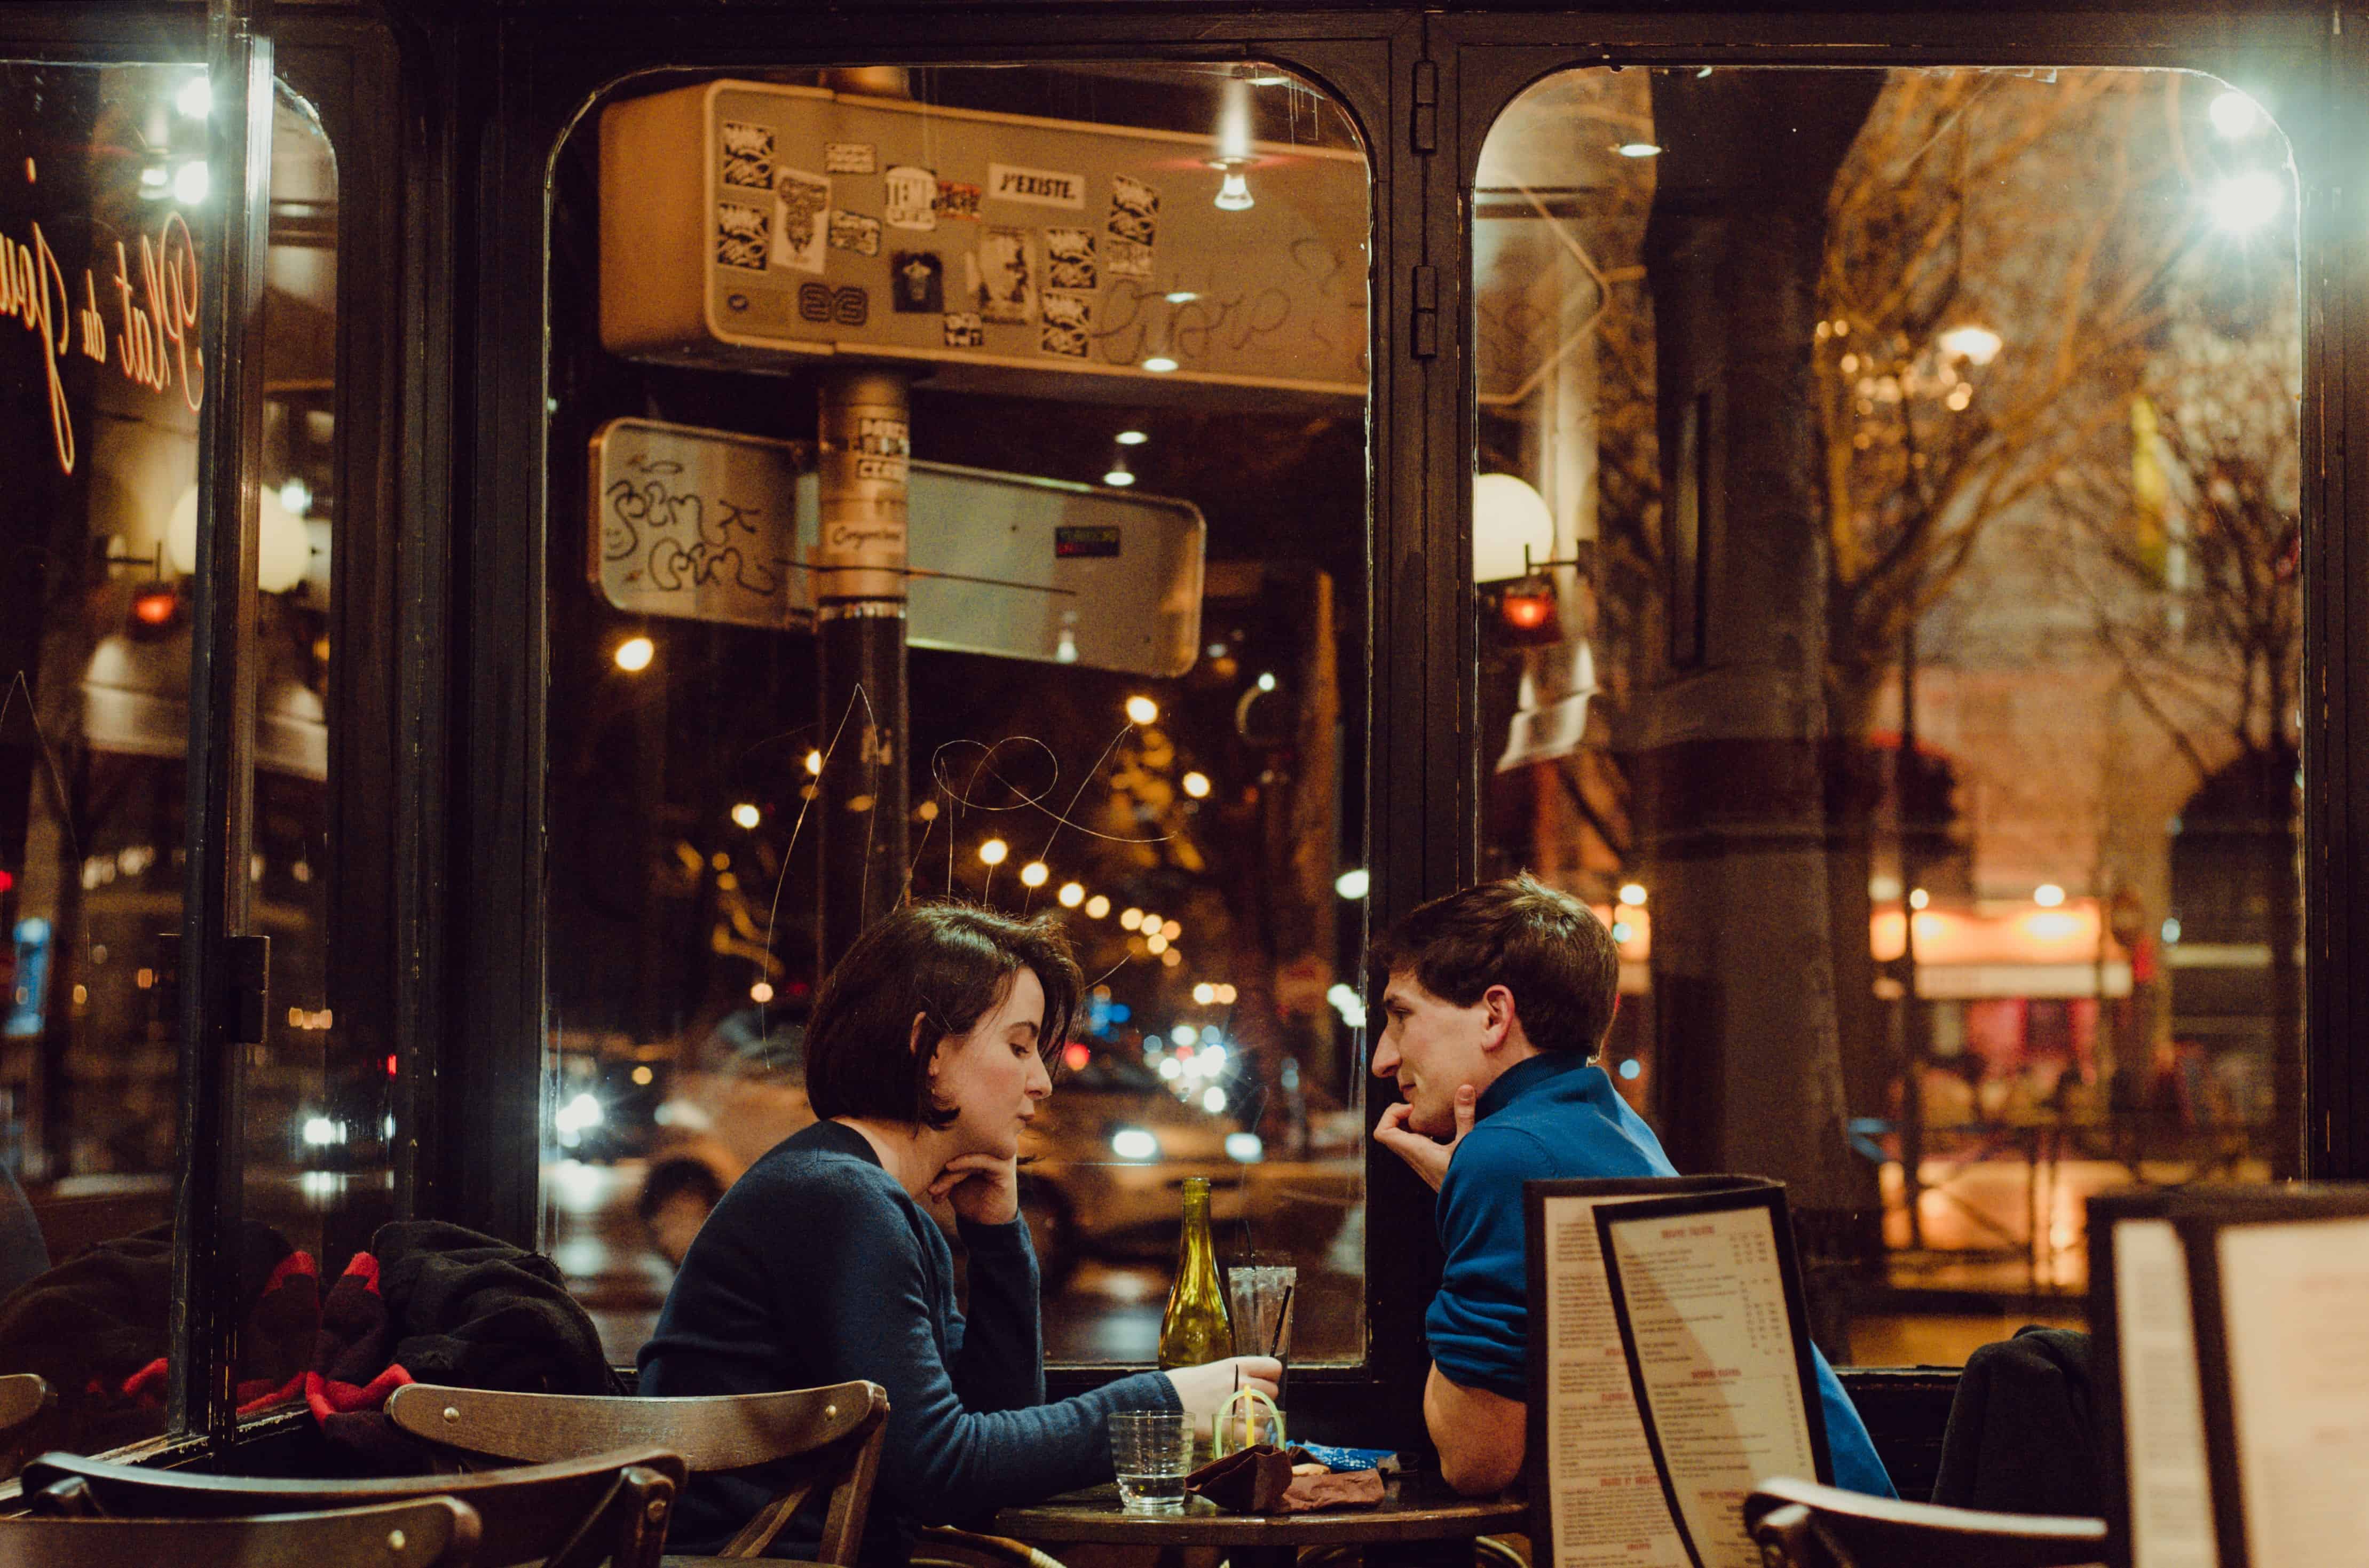 couple sitting near table inside cafe